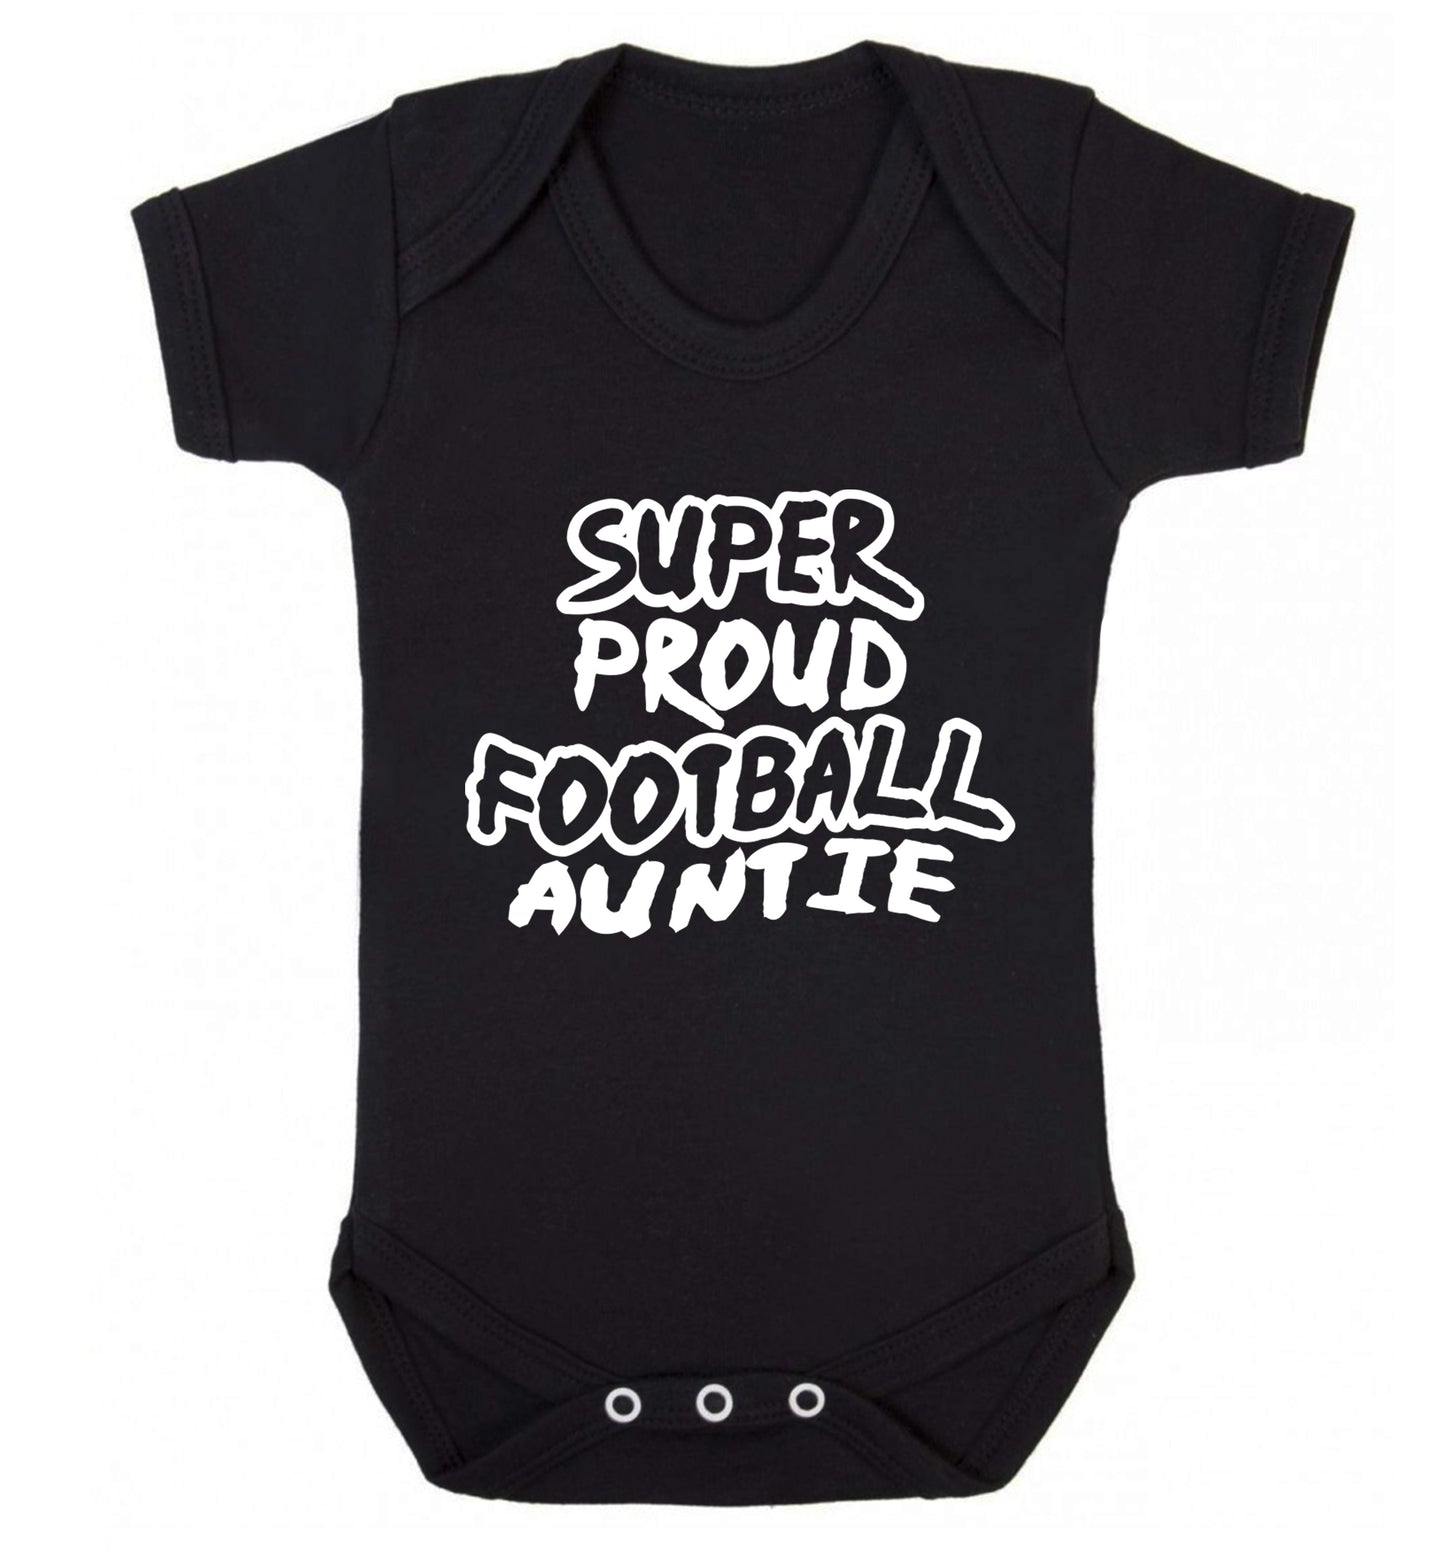 Super proud football auntie Baby Vest black 18-24 months